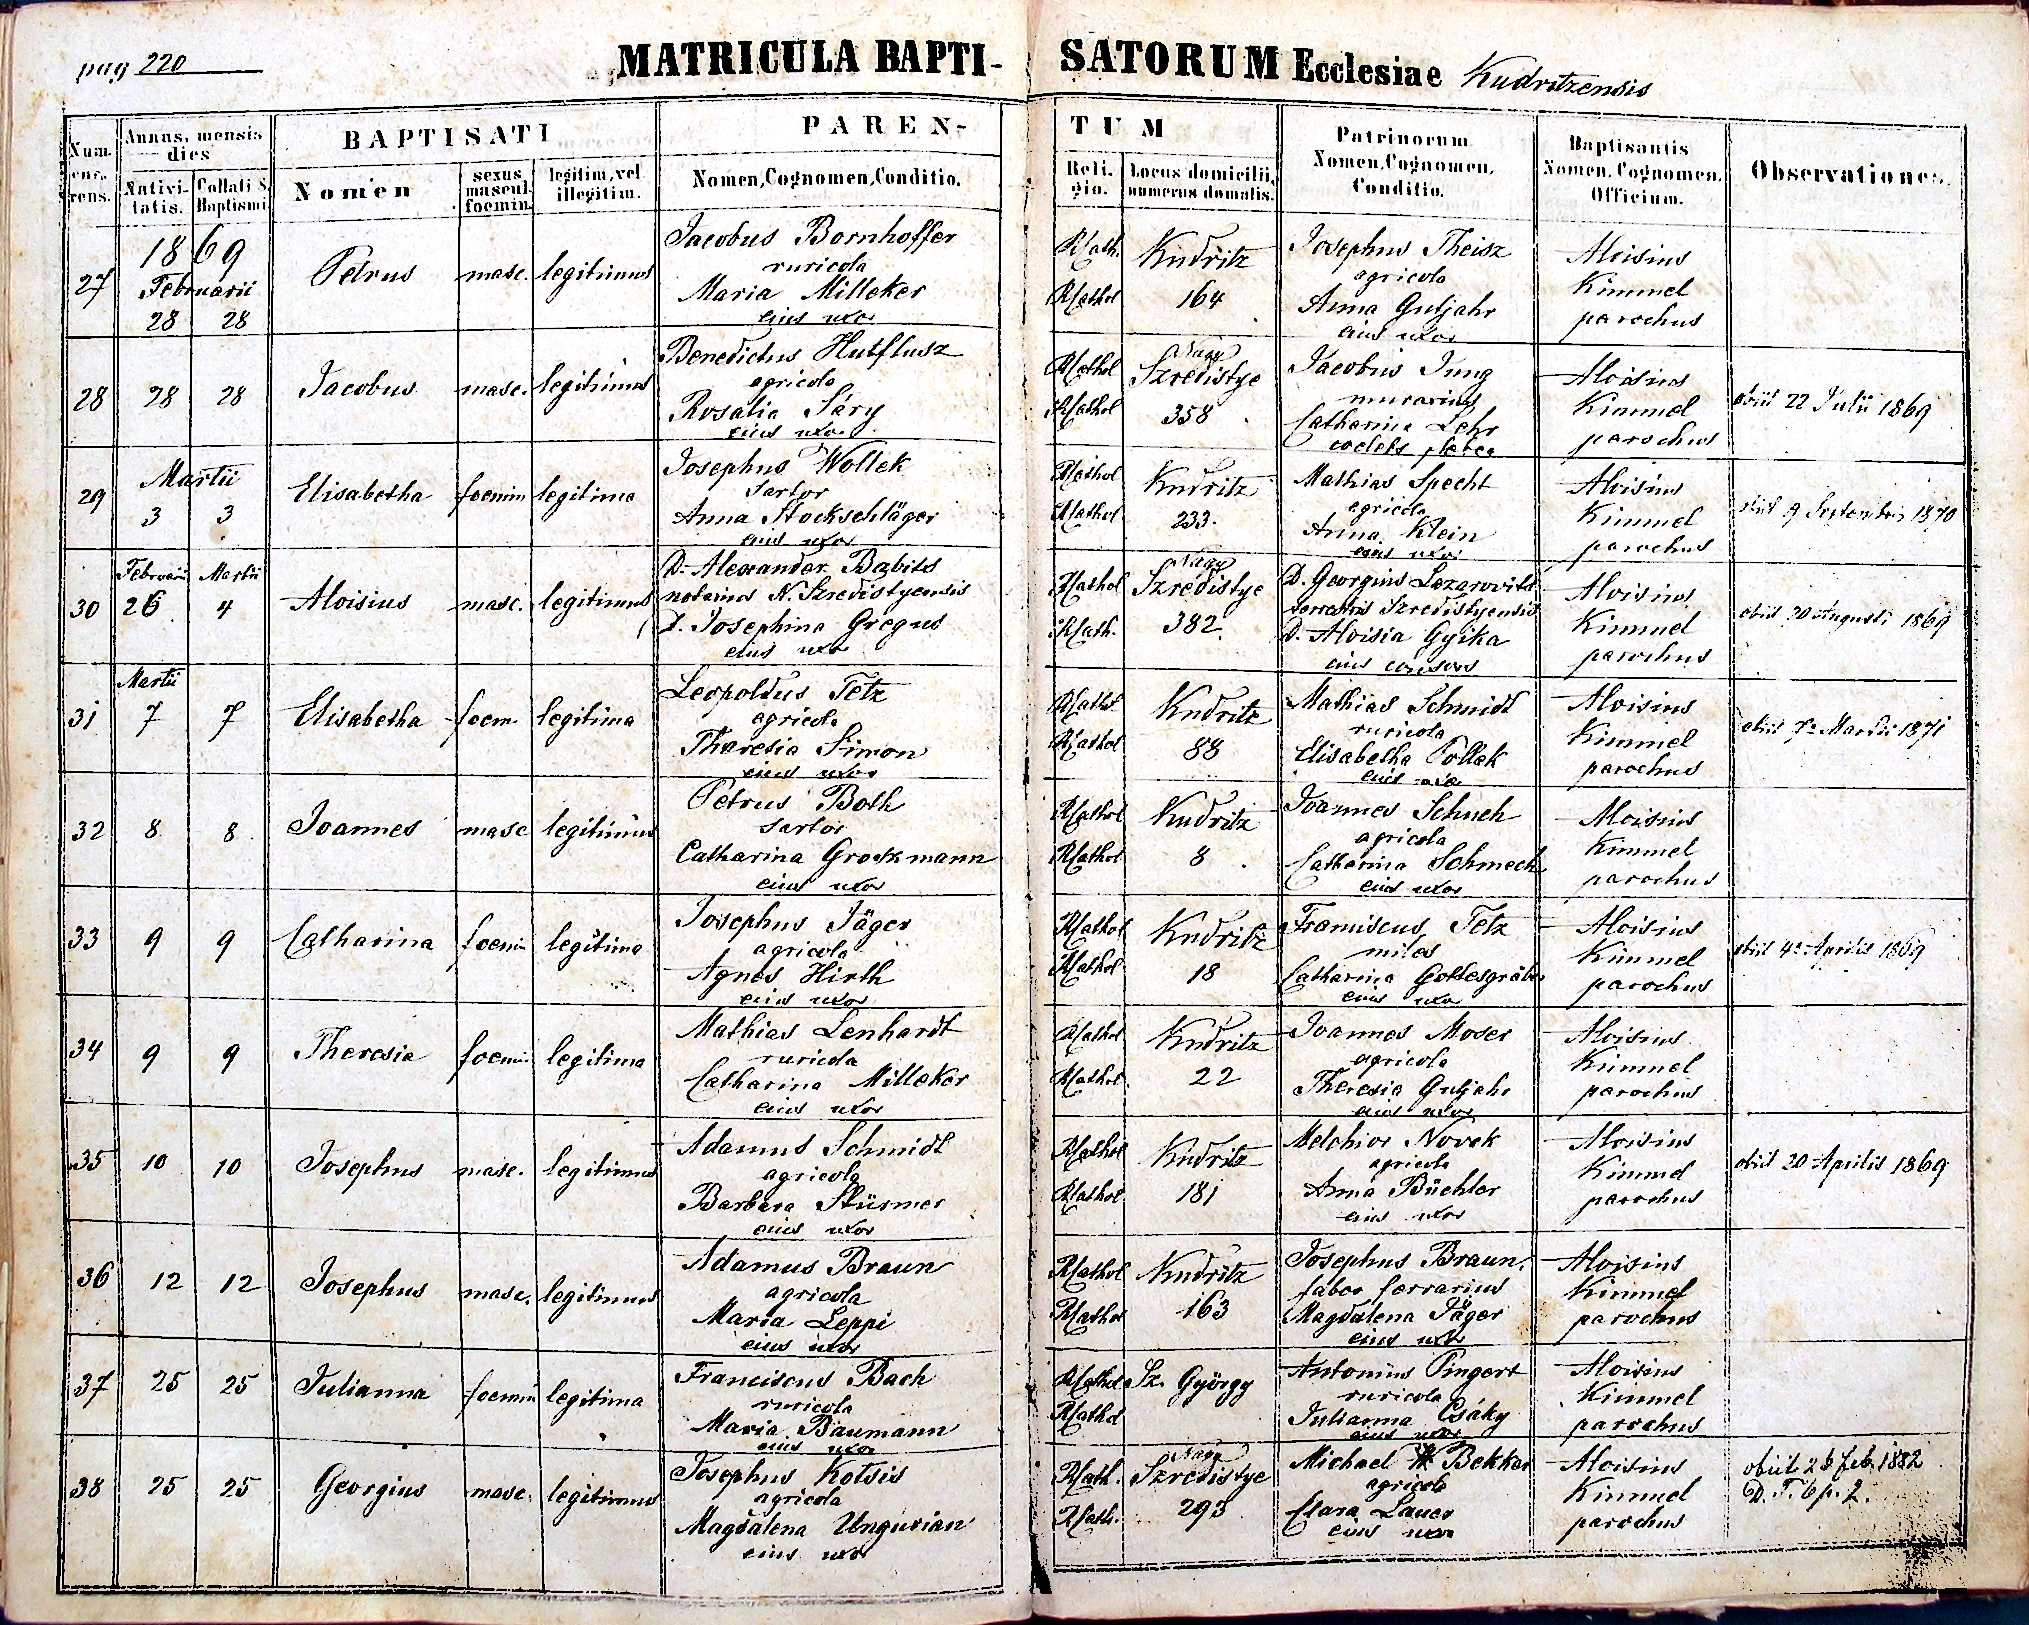 images/church_records/BIRTHS/1852-1870B/220